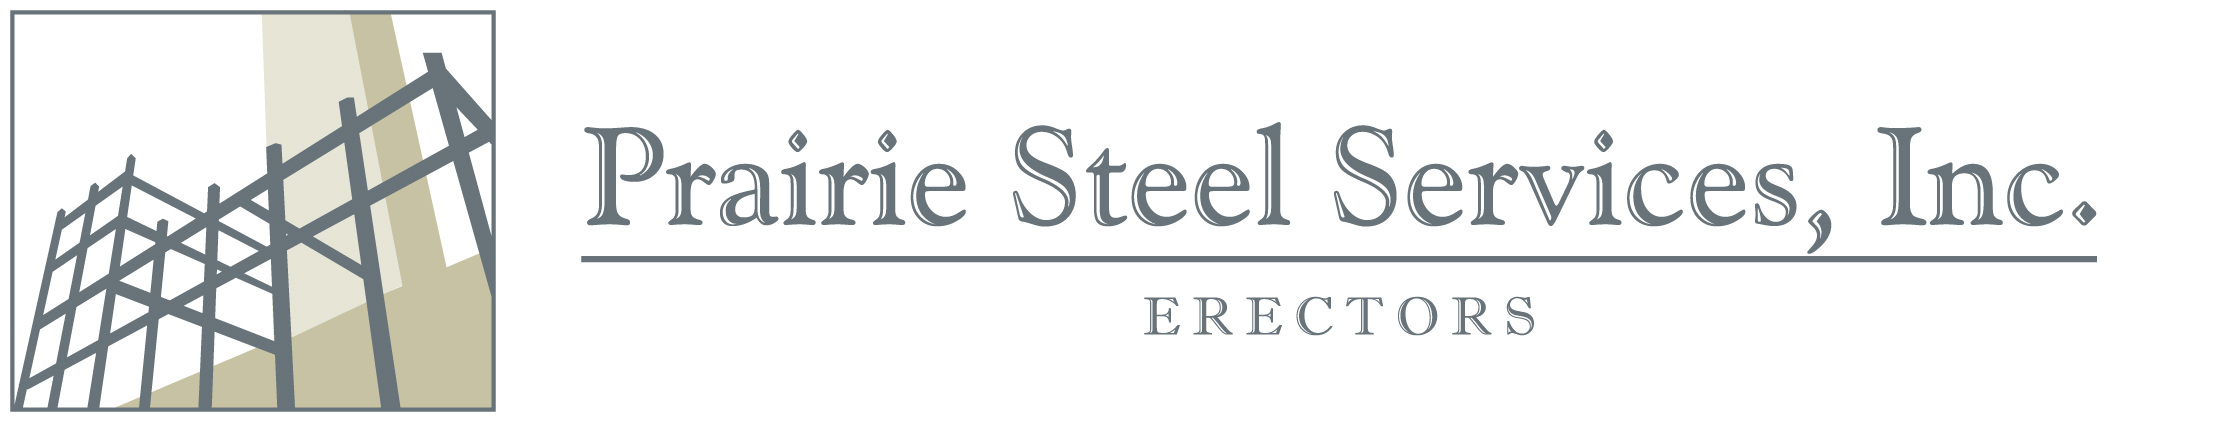 Prairie Steel Services, Inc.